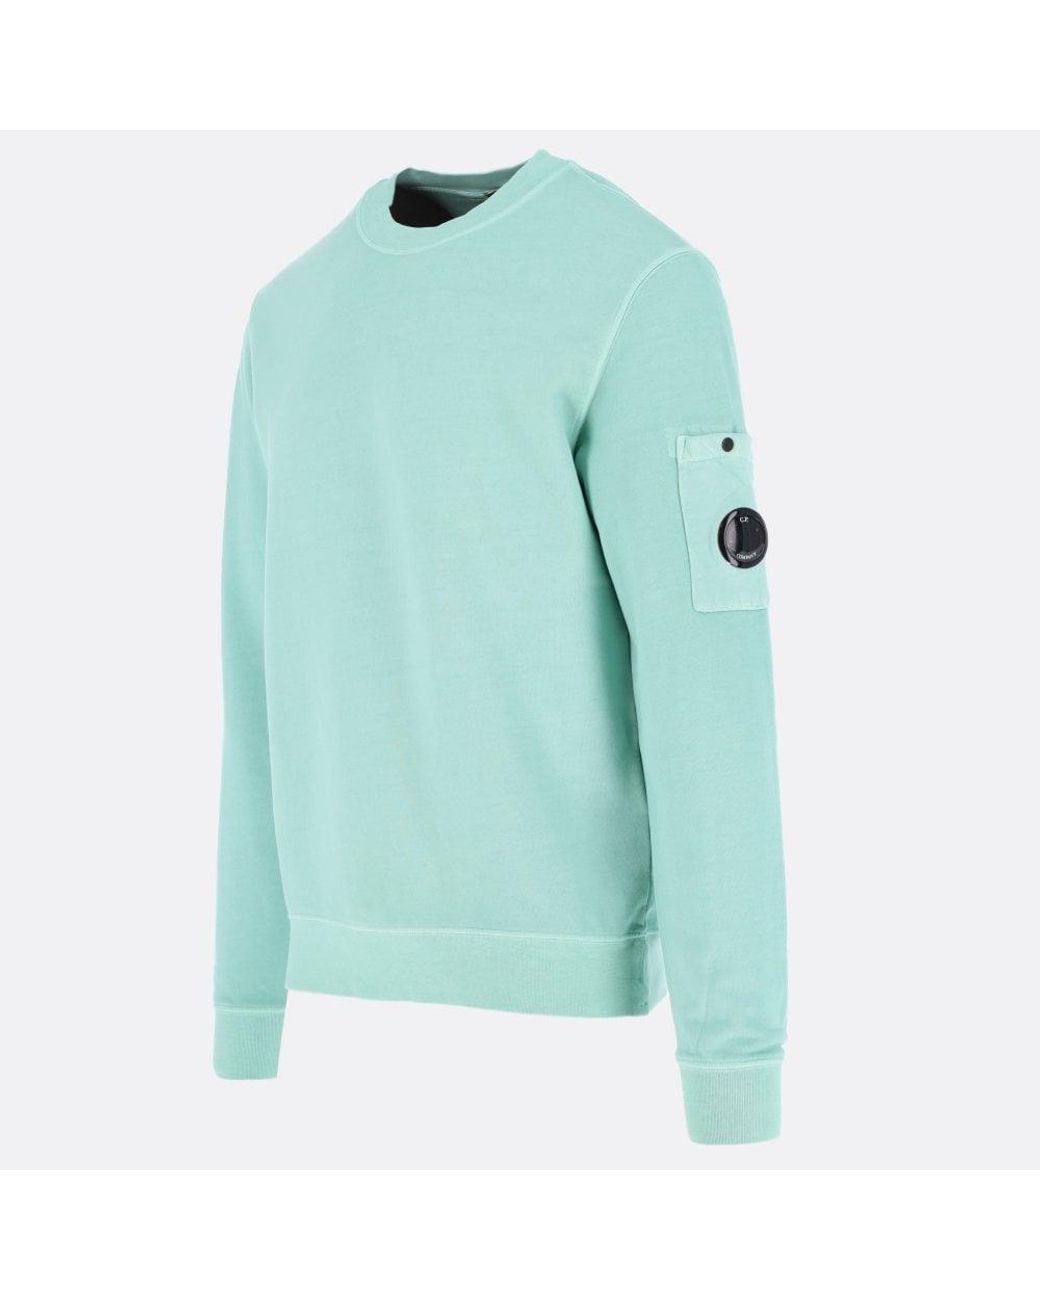 C.P. Company Brushed Resist Dye Sweatshirt in Blue for Men | Lyst